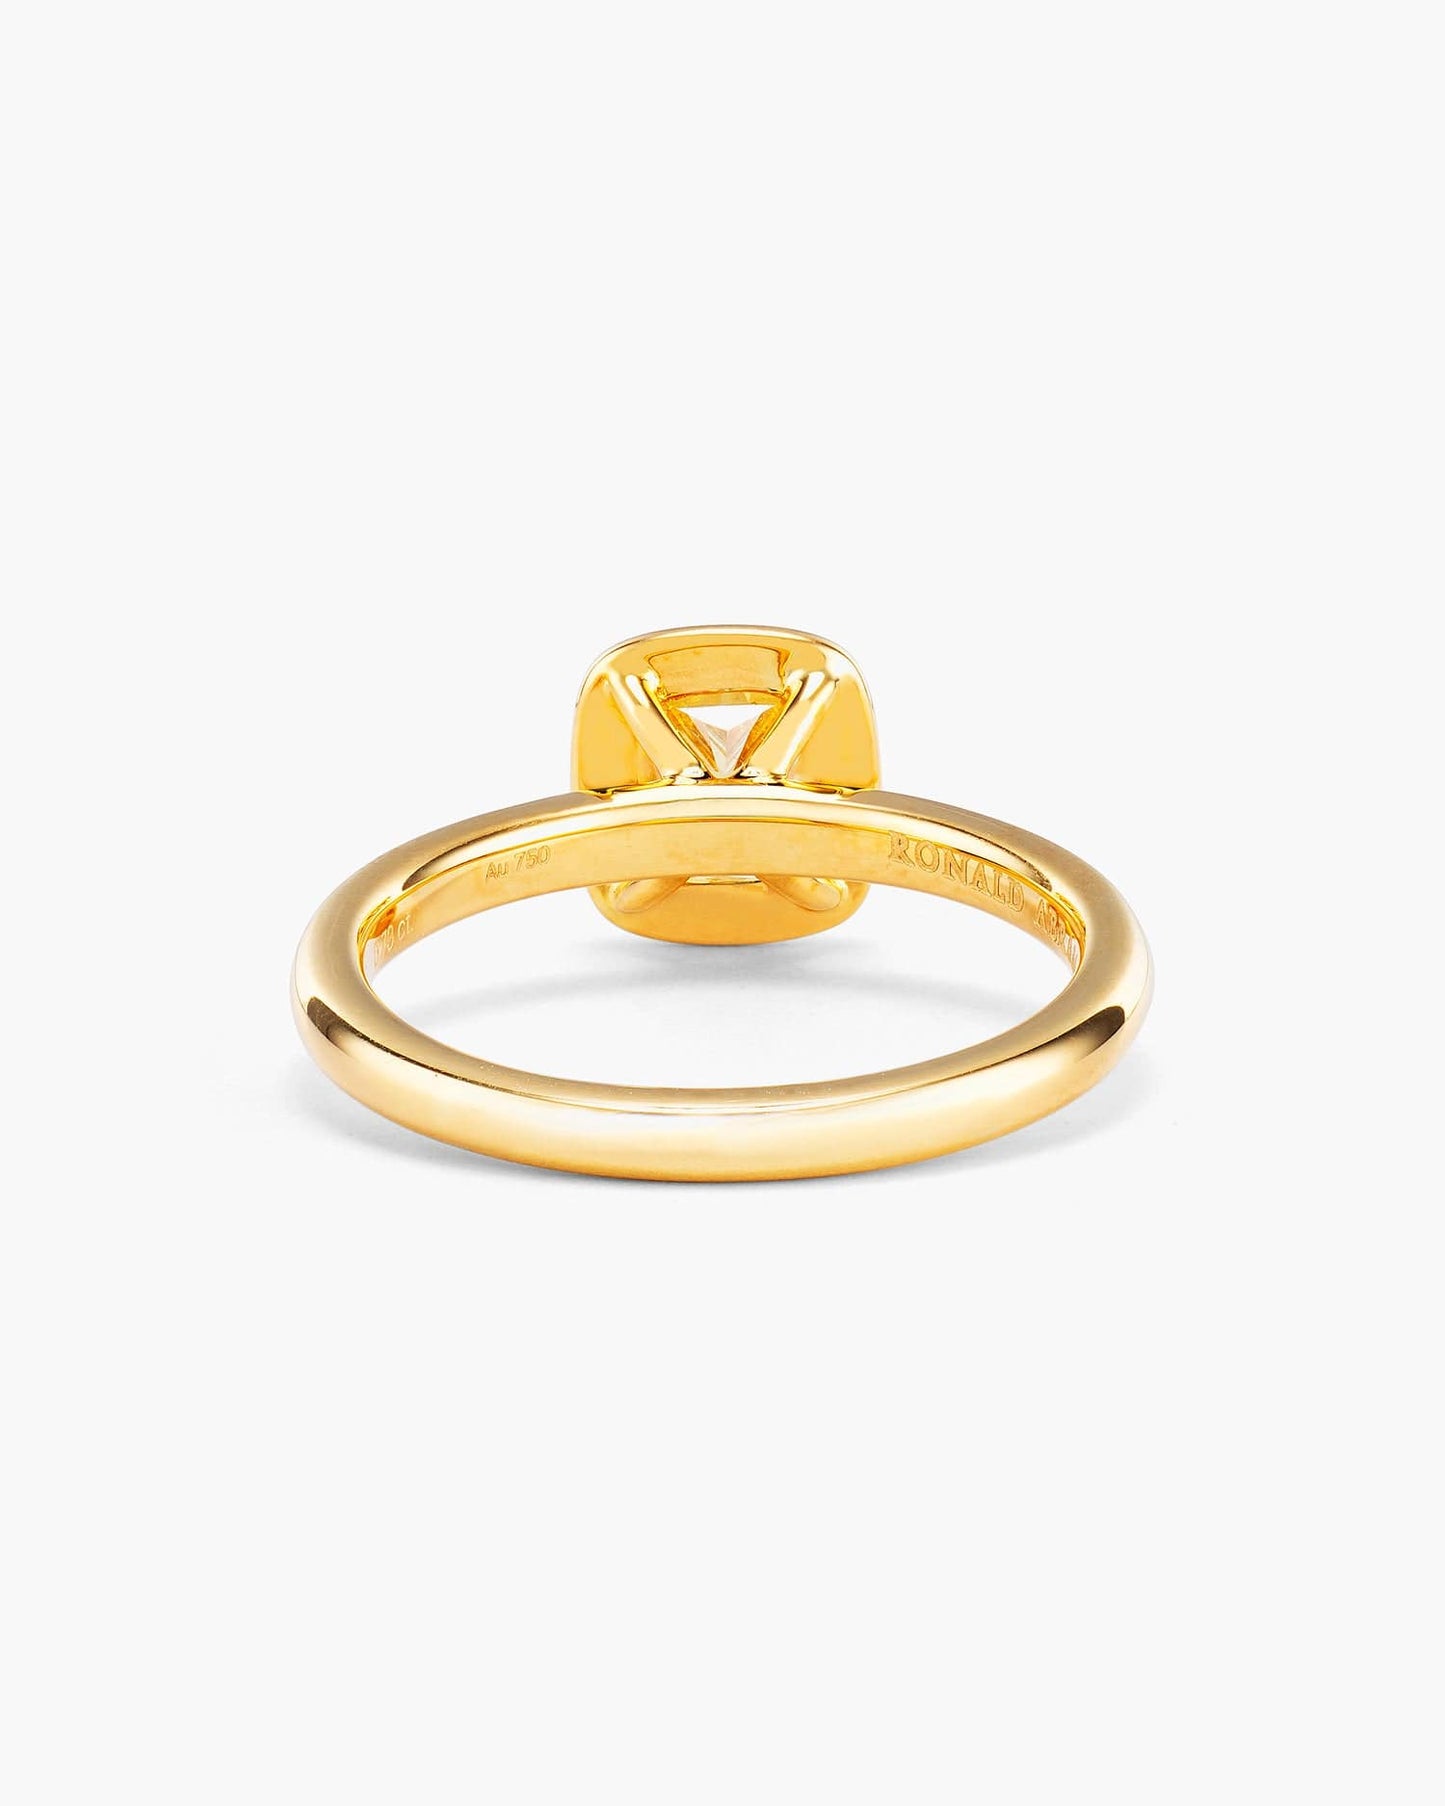 0.73 carat Cushion Cut Yellow Diamond Ring